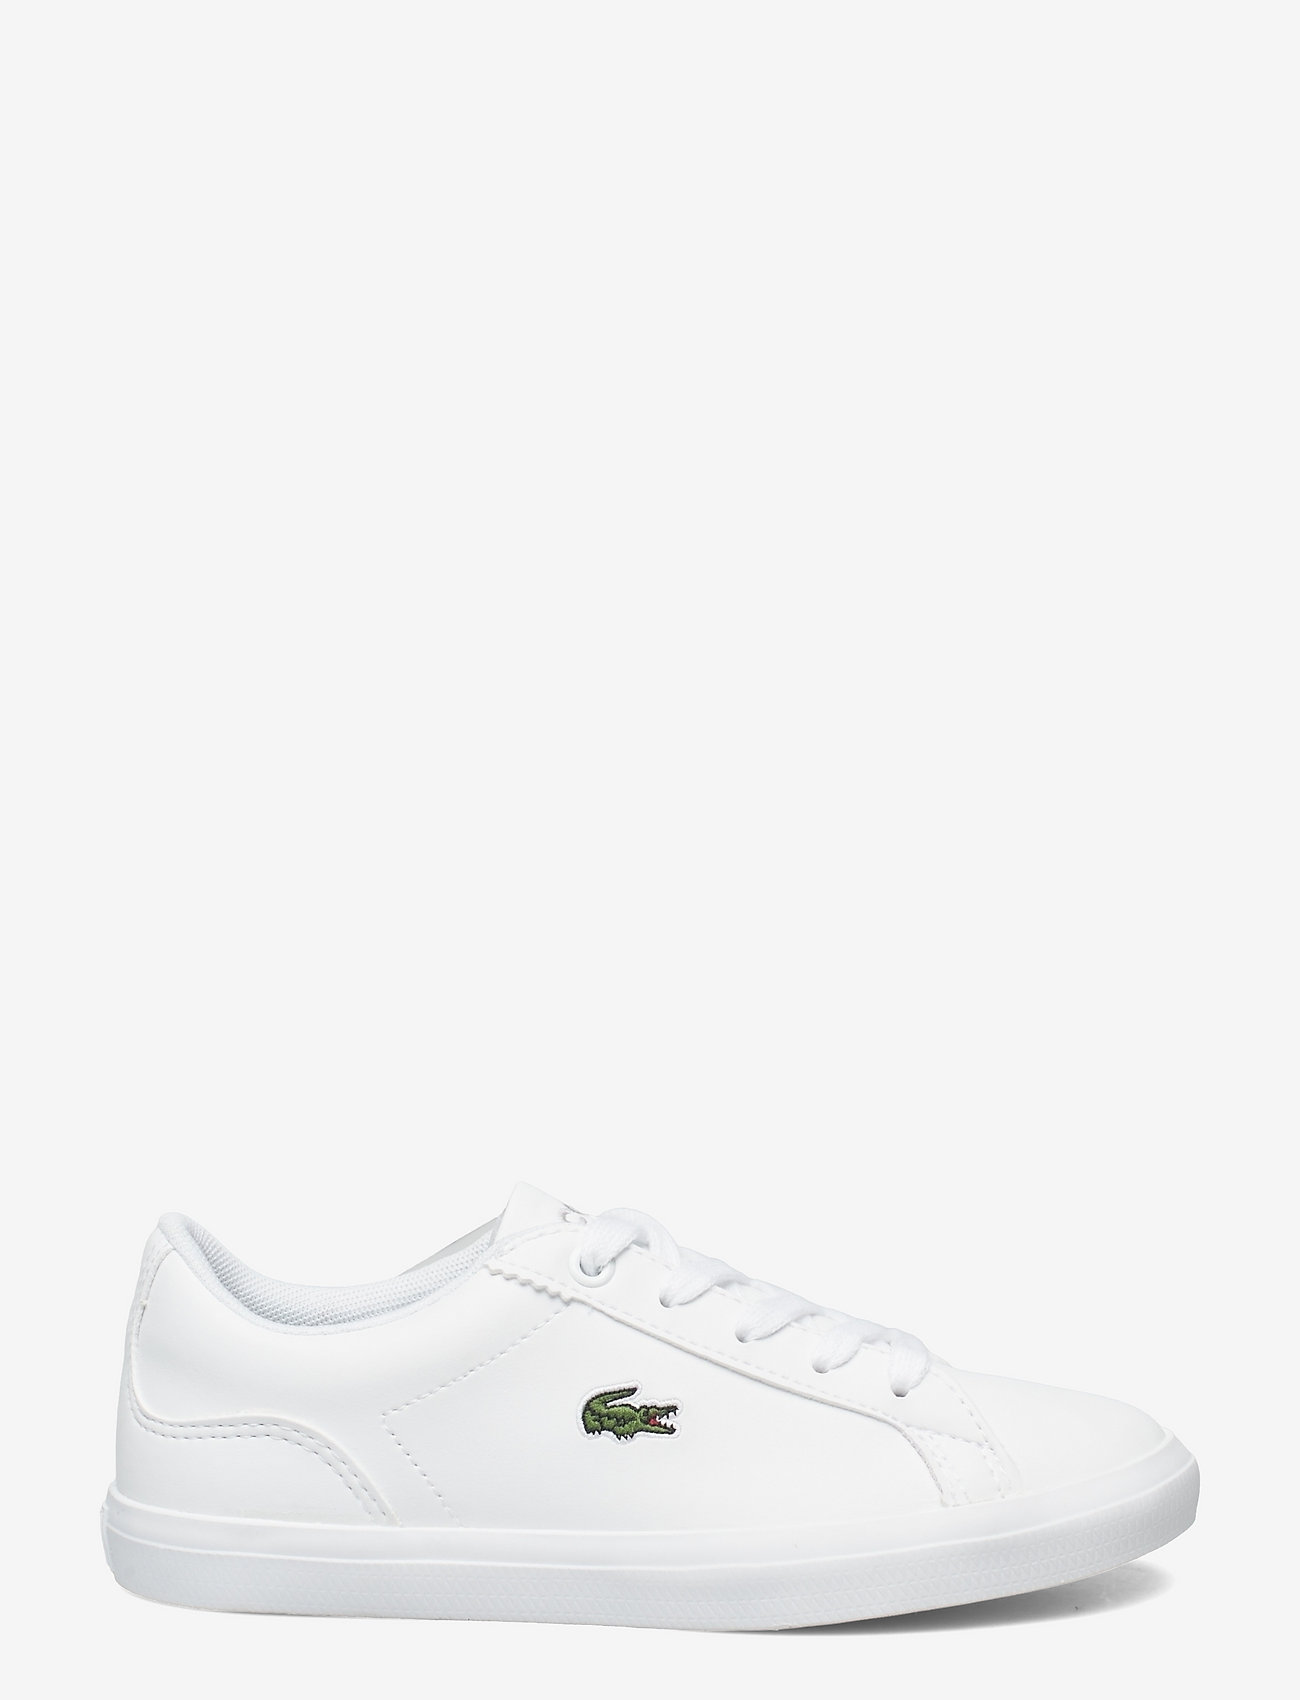 Lacoste Shoes Lerond Bl 21 1 Cuc - Sneakers | Boozt.com